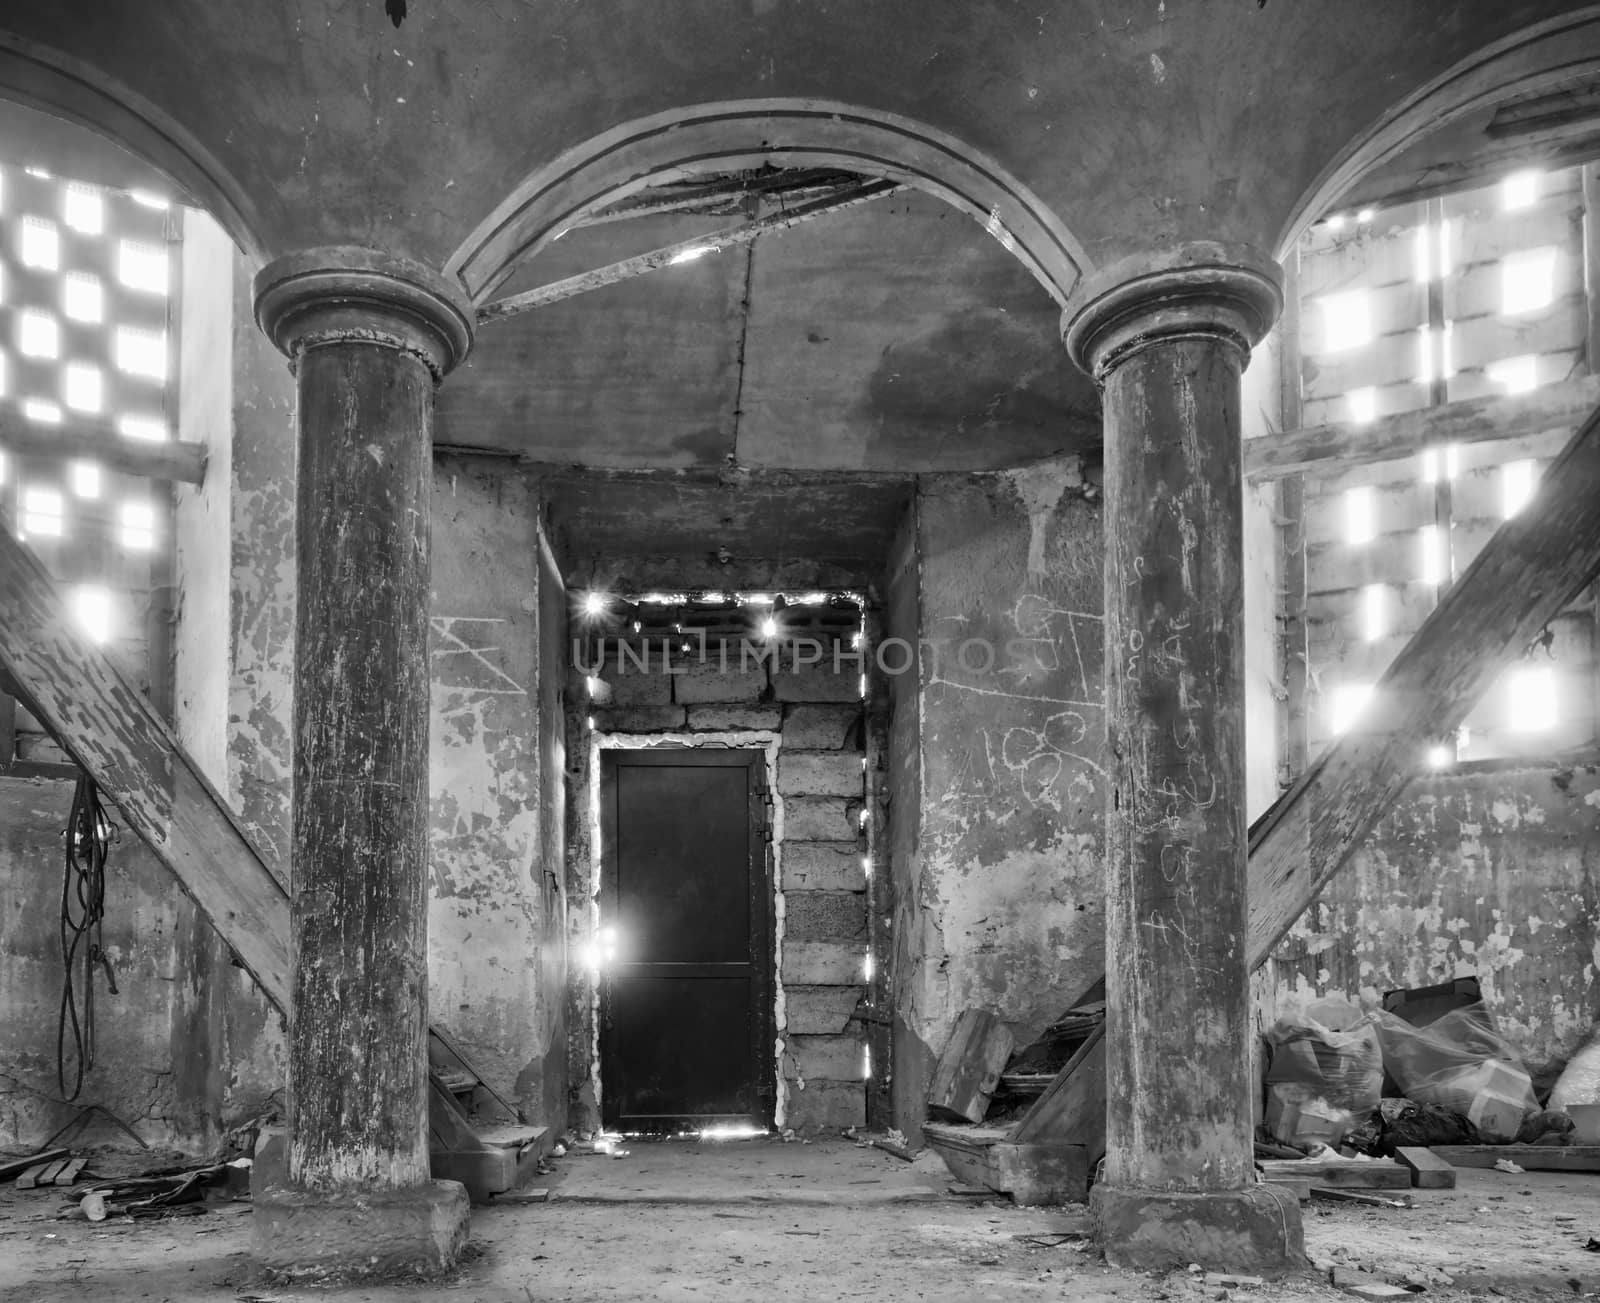 Interier of abandoned church. Vault apse by rdonar2